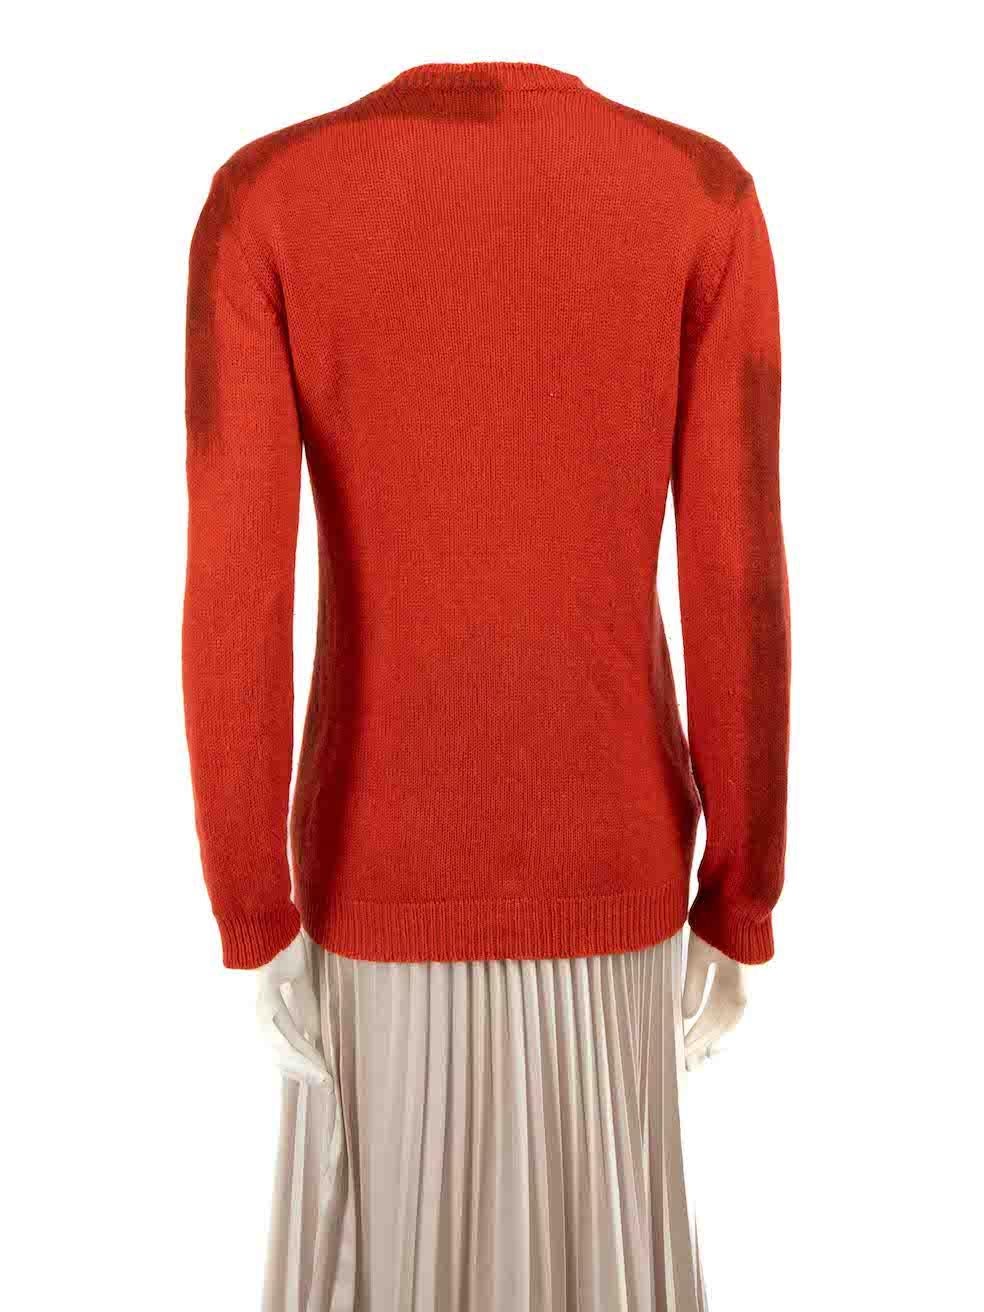 Marni Orange Cashmere Knit Ombré Shoulder Jumper Size L In Good Condition For Sale In London, GB